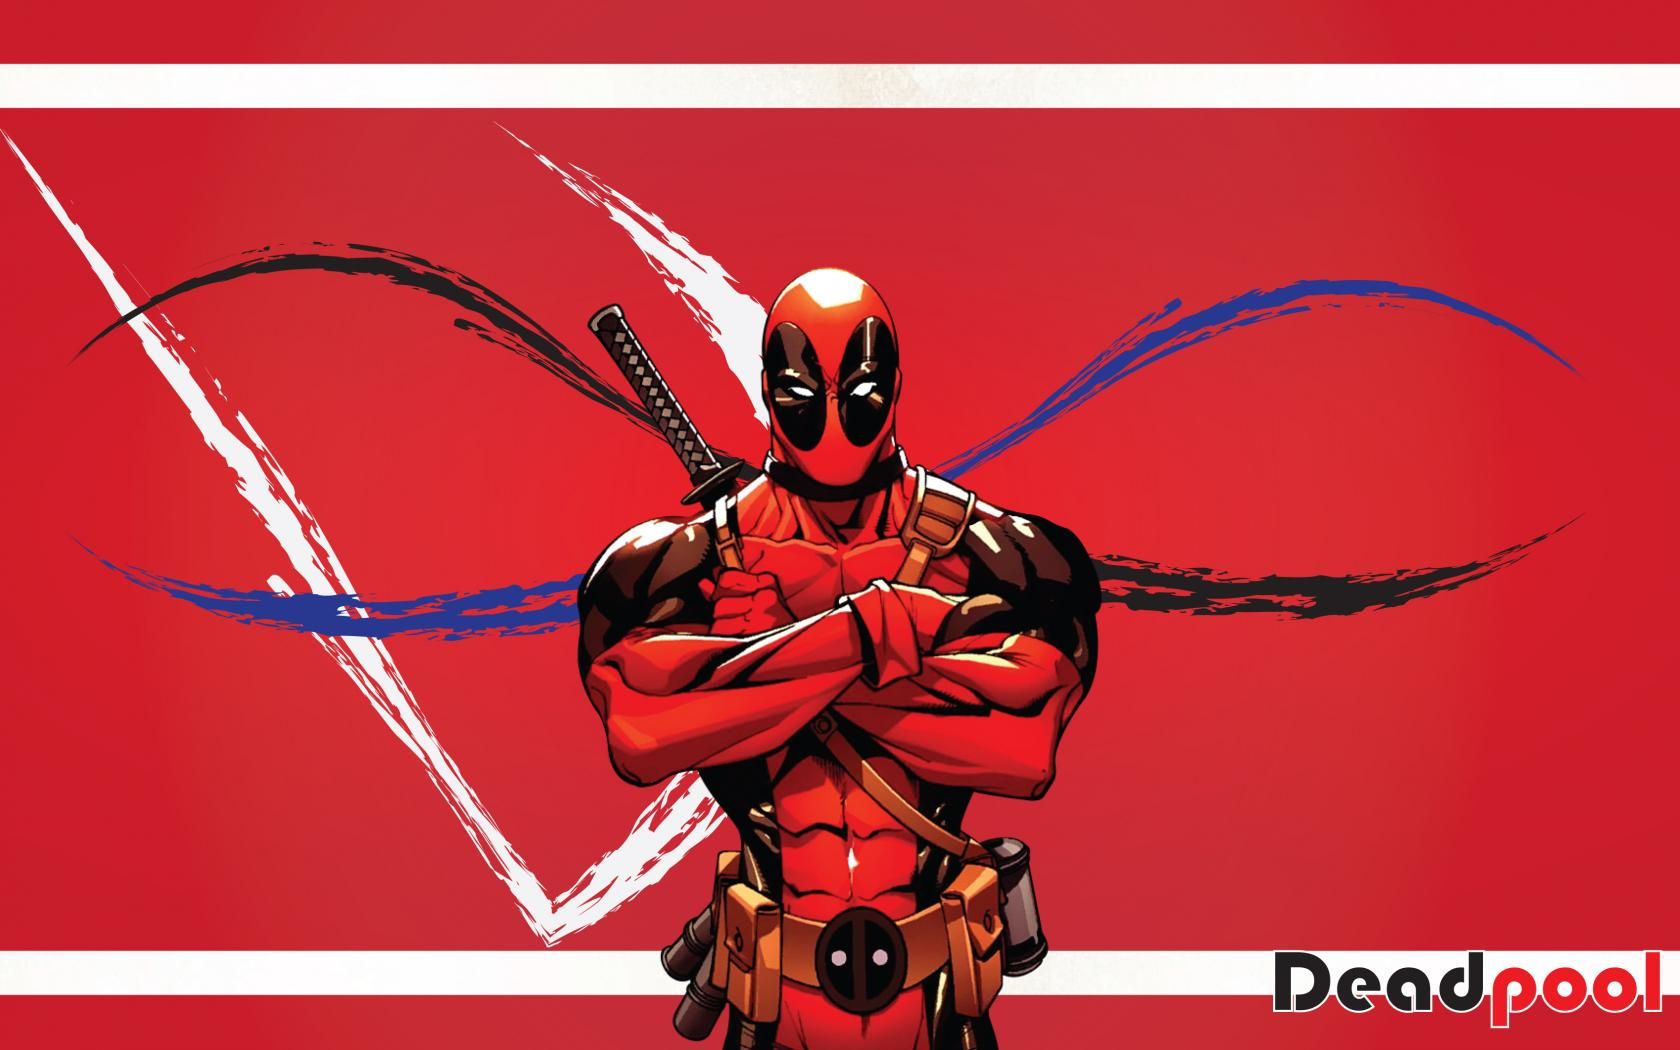 Cool Wallpaper with Deadpool Cartoon Character (27 Pics) Wallpaper. Wallpaper Download. High Resolution Wallpaper